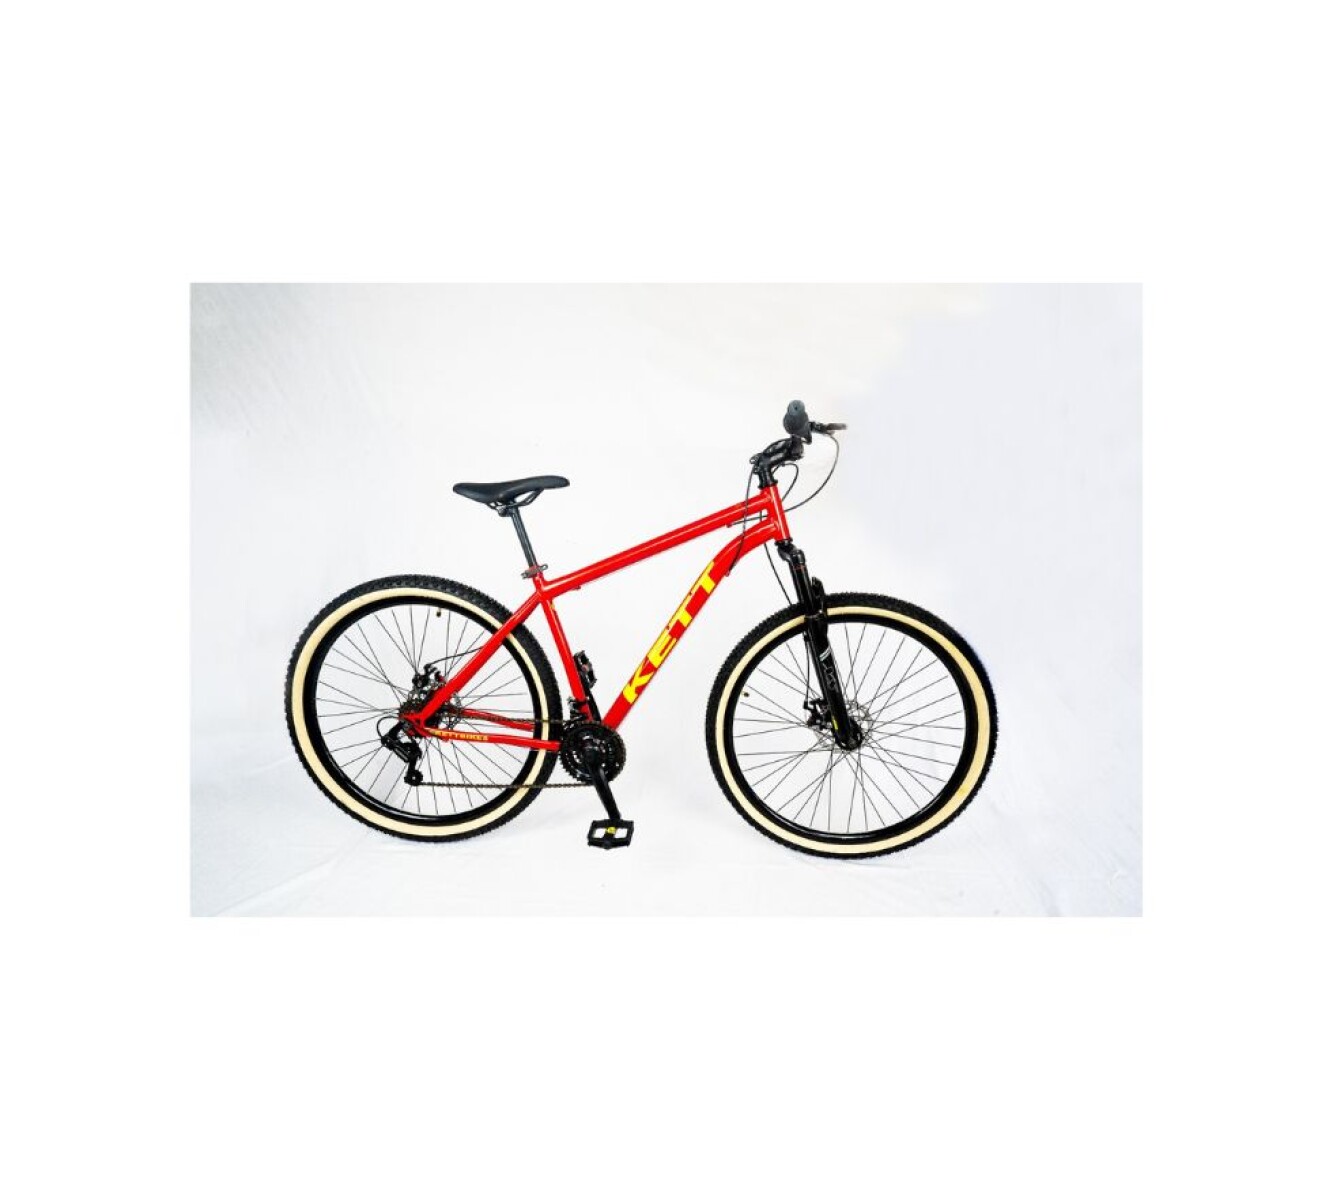 Bicicleta Kett Montaña Smr 2022 - Roja 